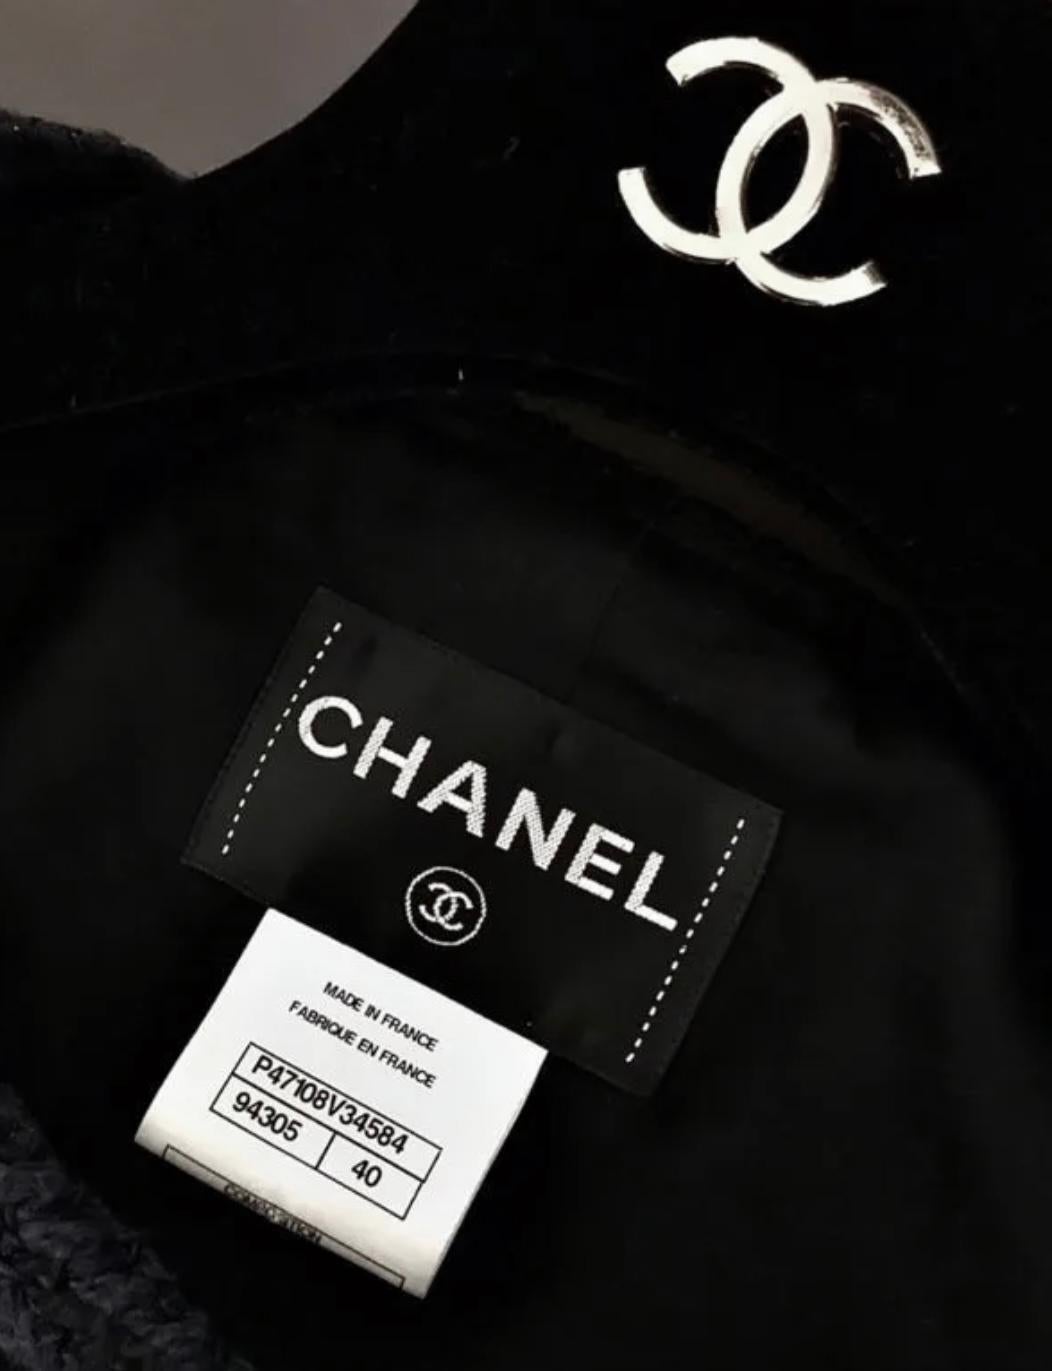 Chanel Iconic Keira Knightley Style Black Tweed Jacket 11